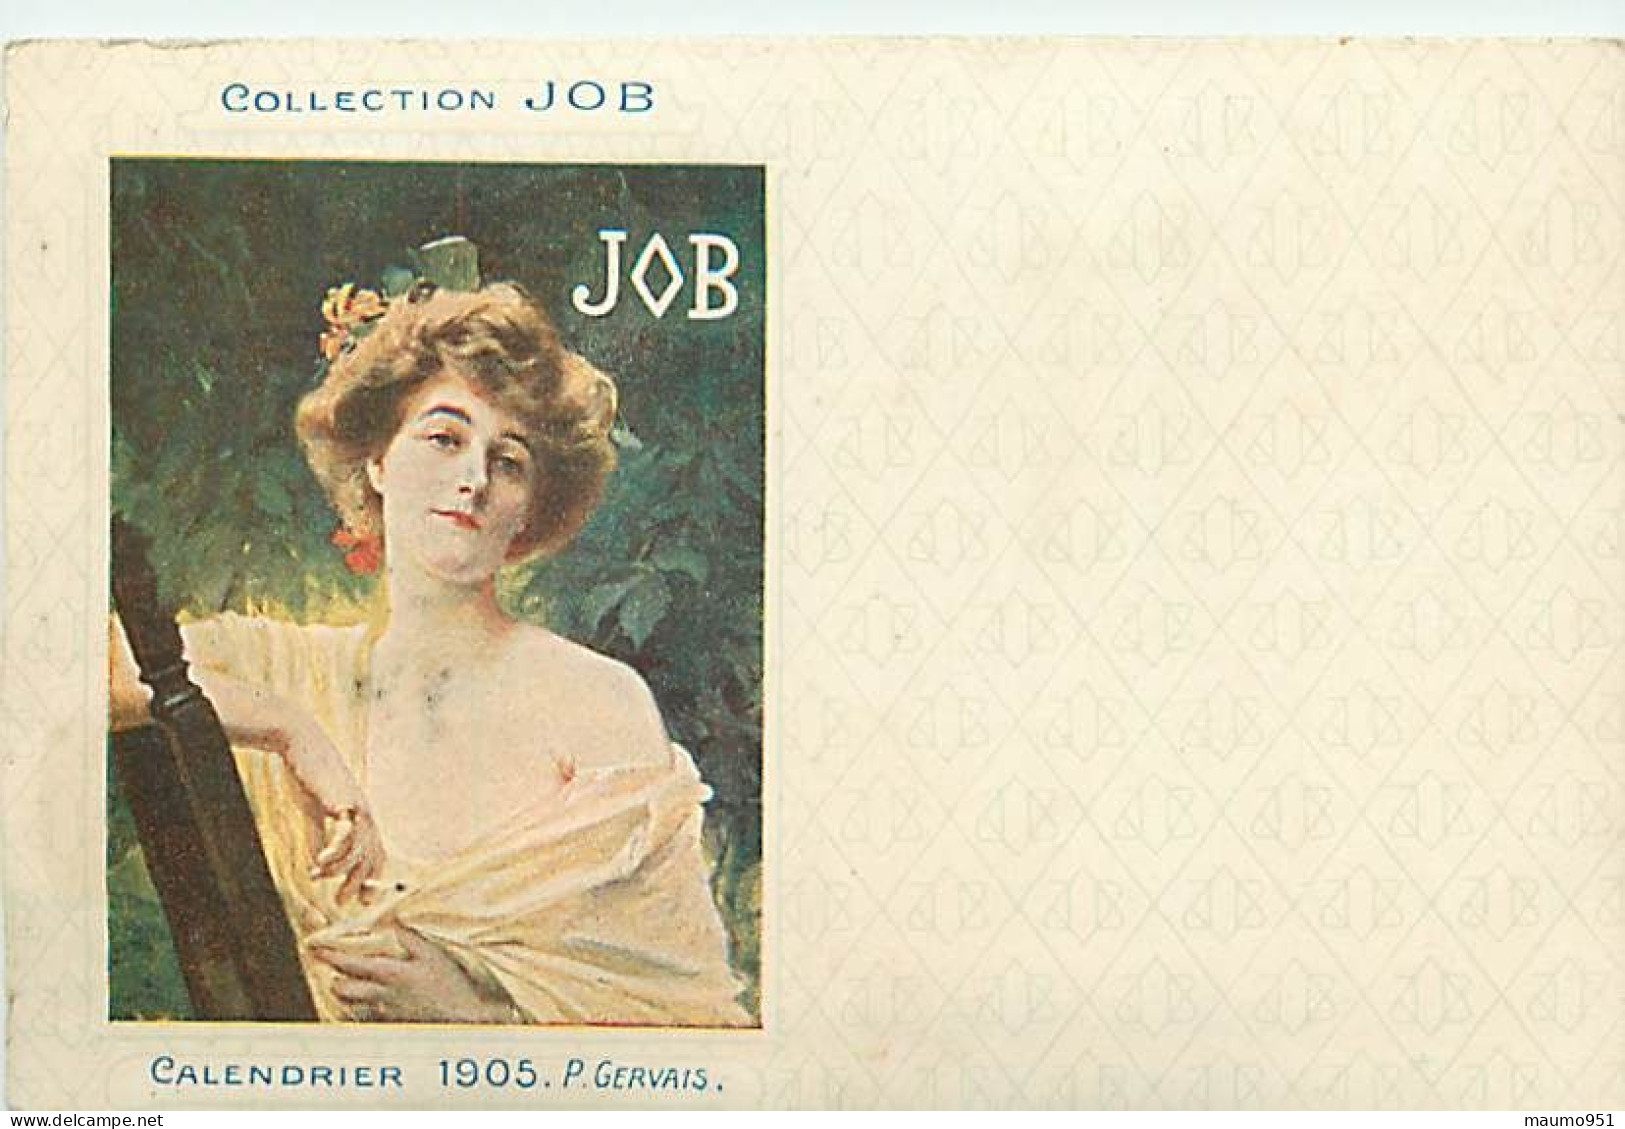 COLLECTION JOB - CALENDRIER 1905 P. GERVAIS - Vor 1900